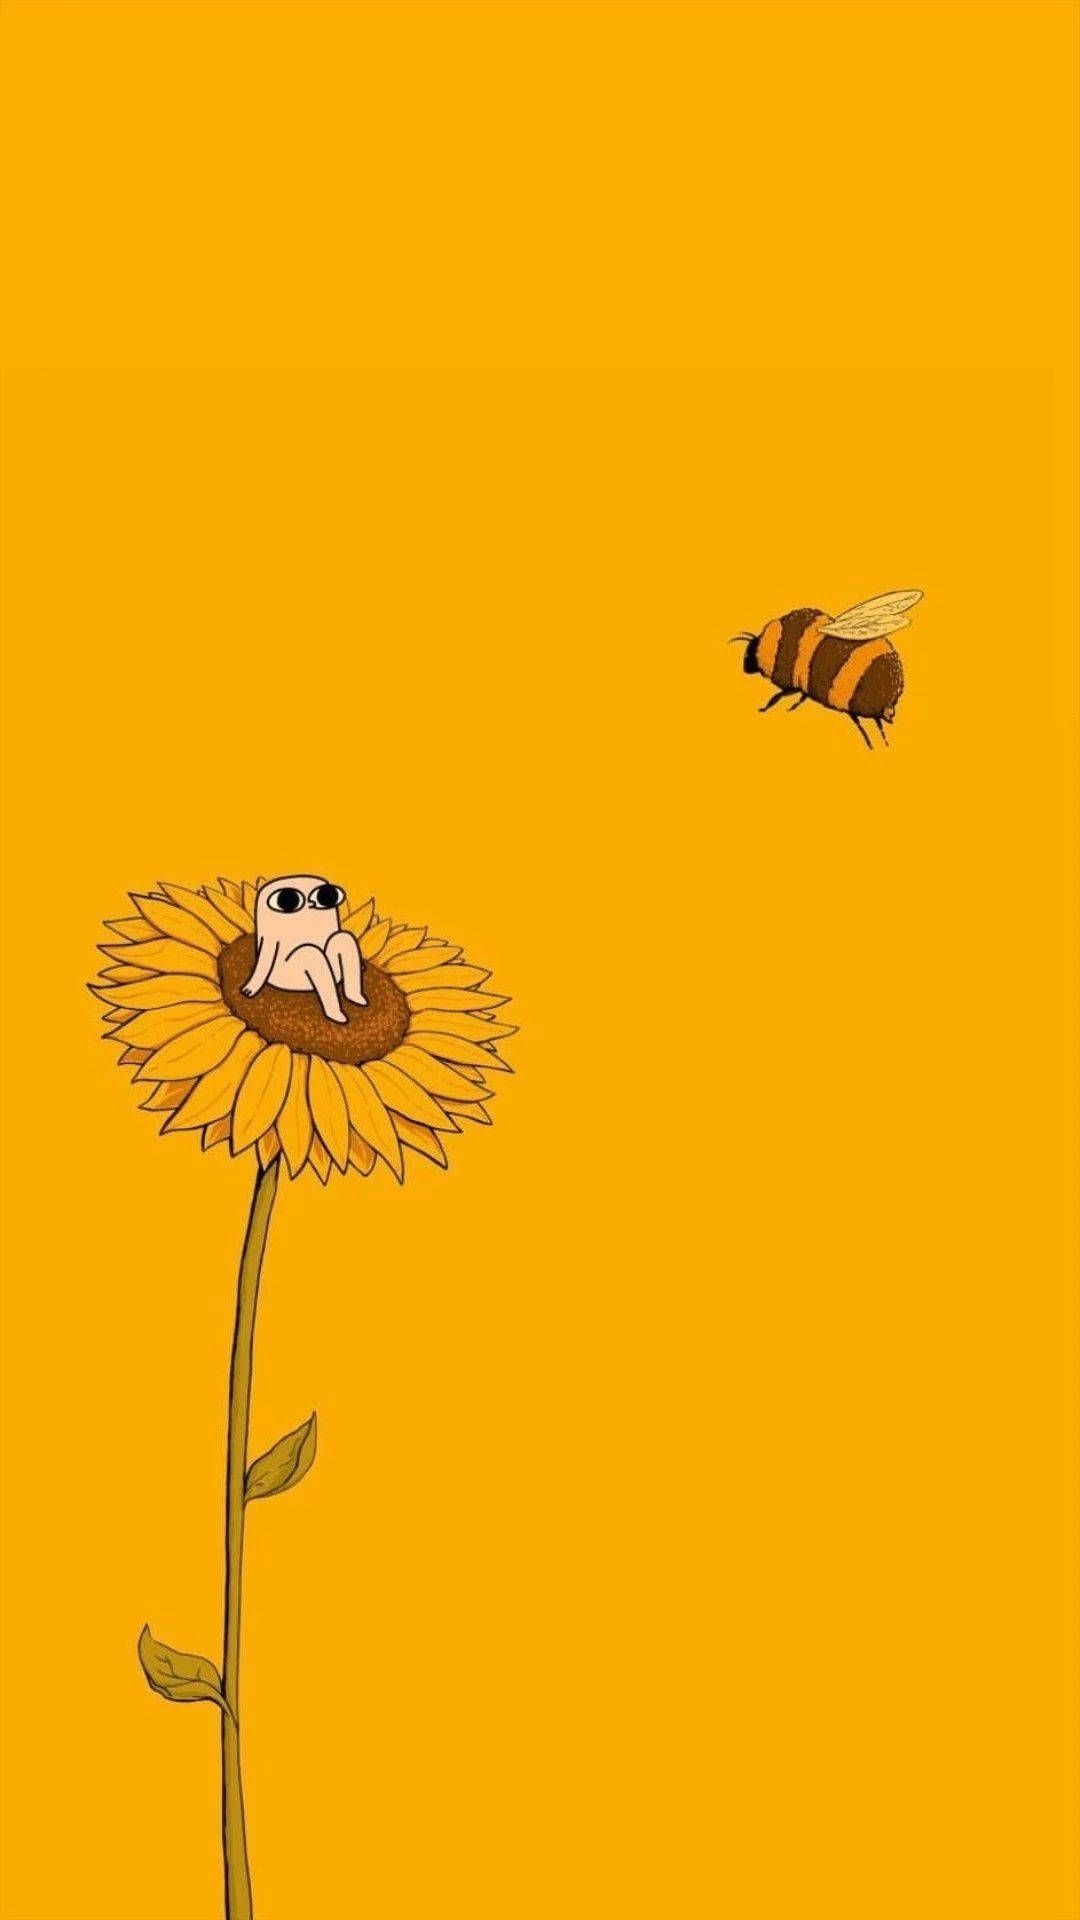 Yellow background, sunflower, bee, cartoon, aesthetic wallpaper, phone background - Bee